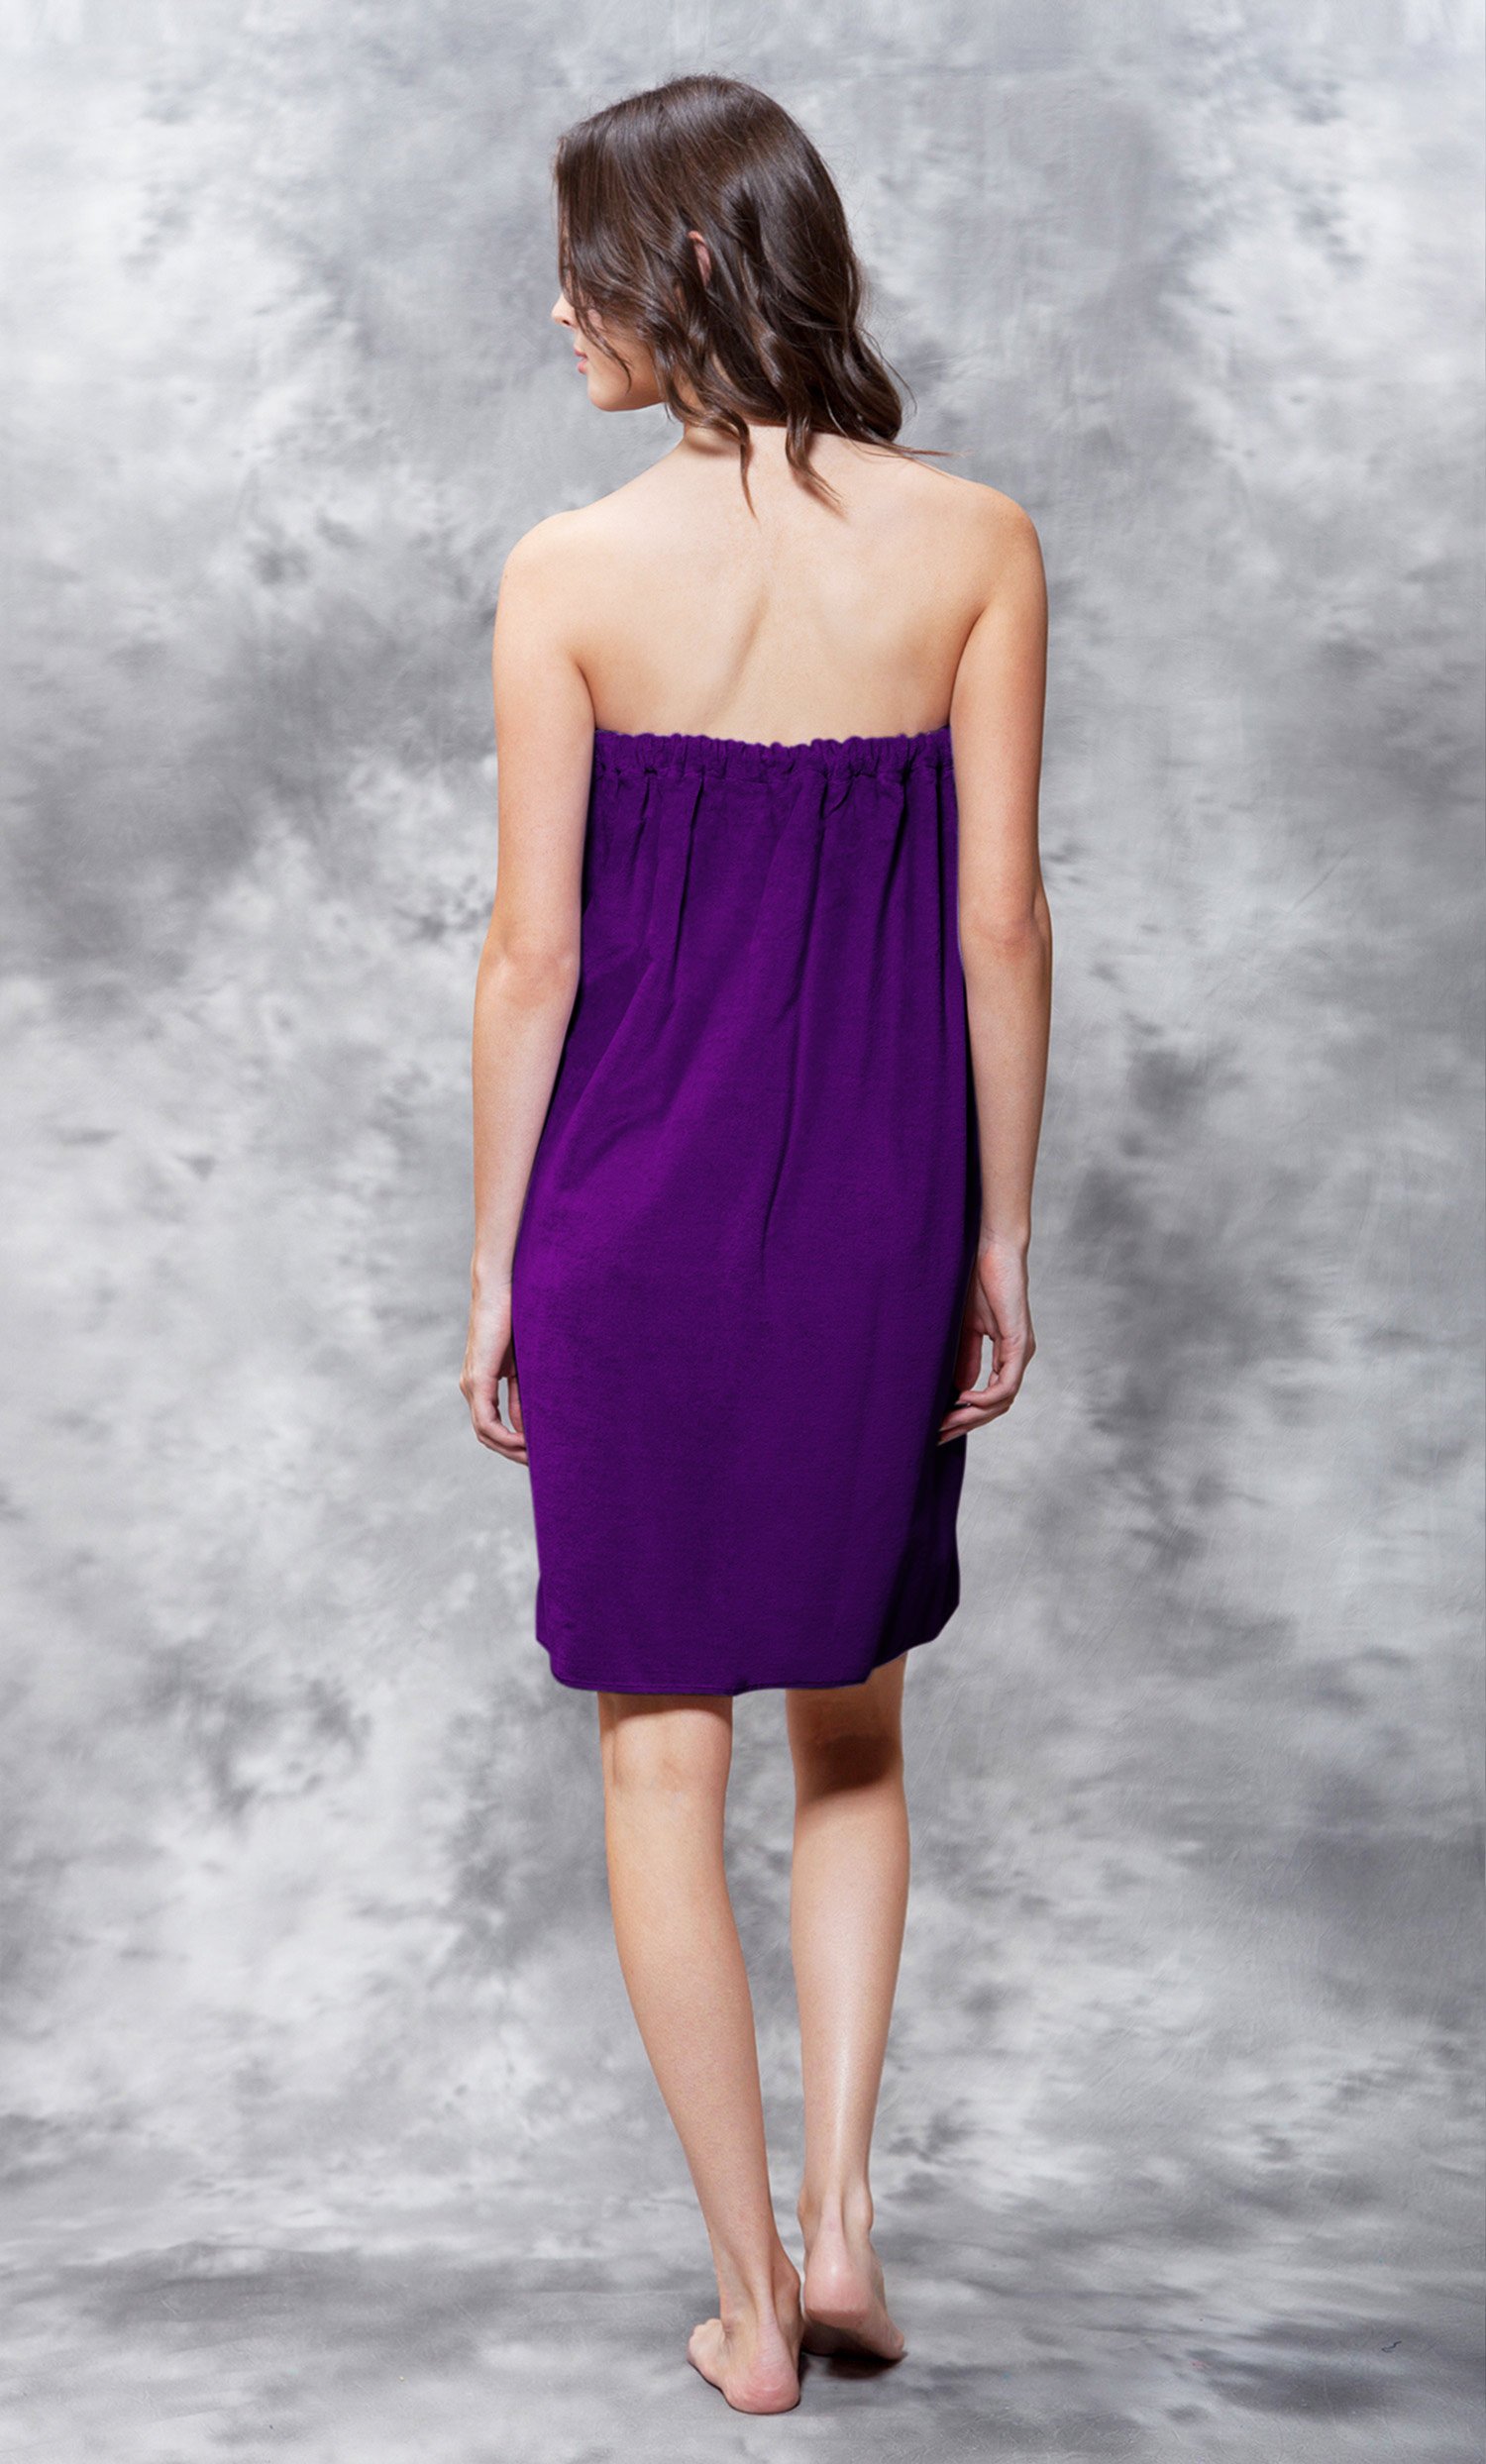 100% Cotton Purple Terry Velour Cloth Spa Wrap, Bath Towel Wrap-Robemart.com